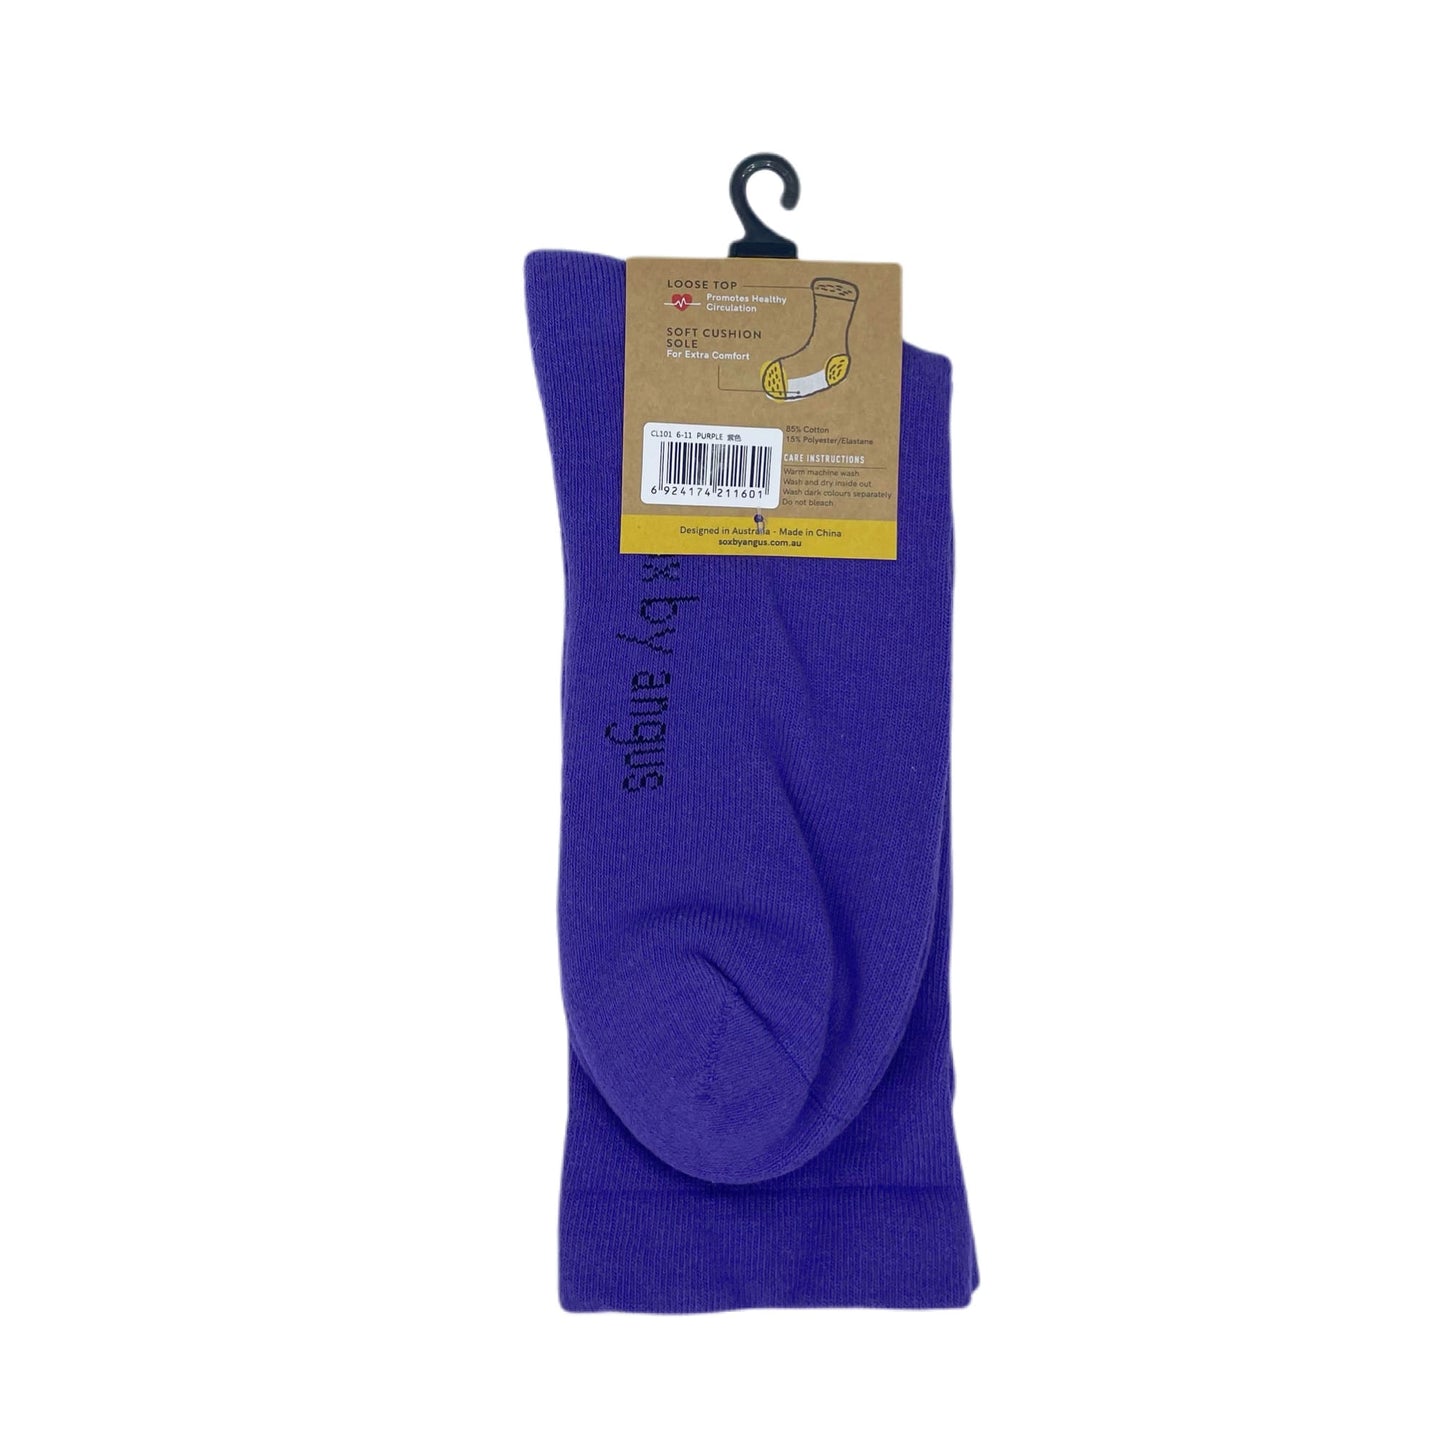 Cotton Plain Cushion Foot Loose Top Socks - Purple - NO SEAM